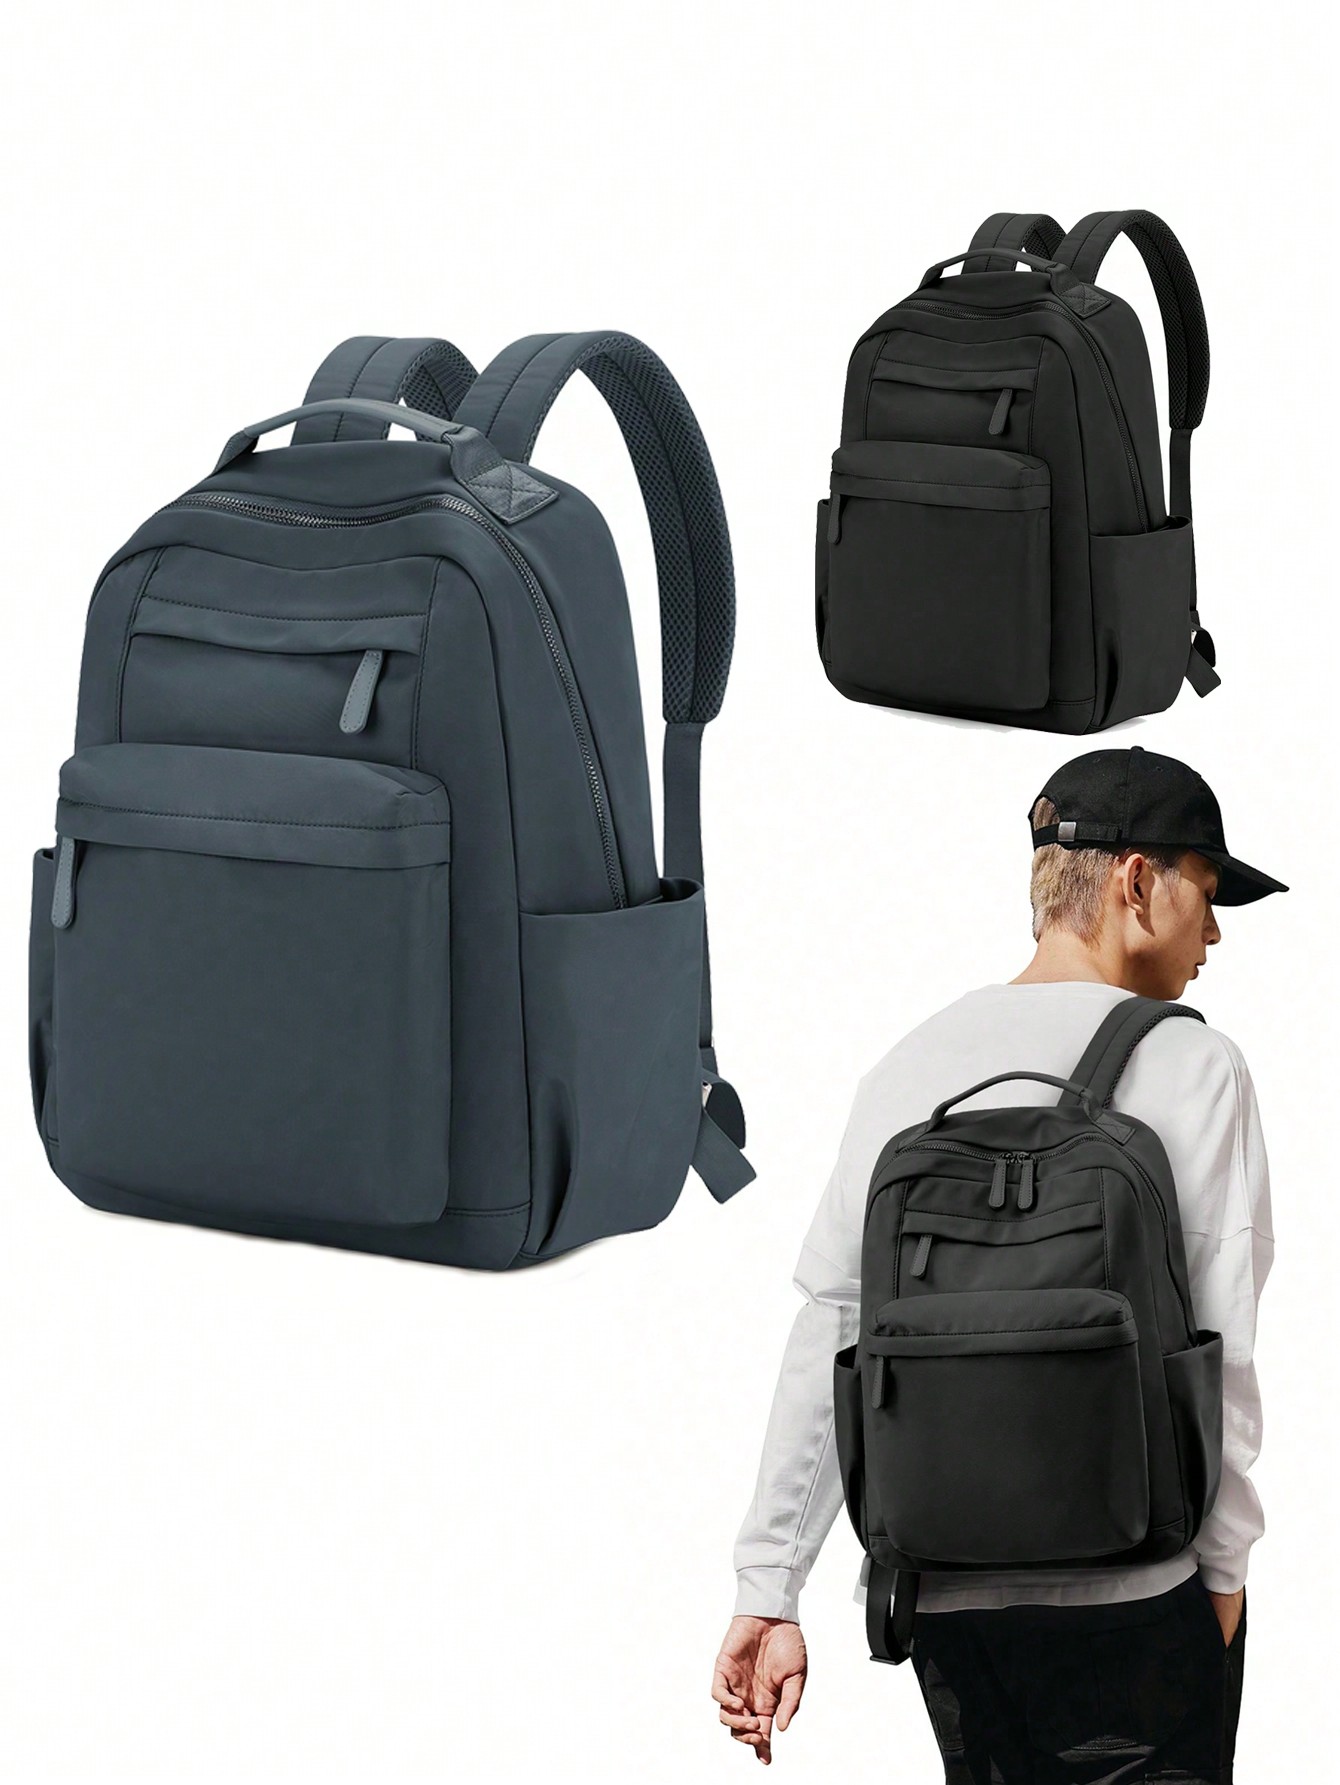 Рюкзаки Мужские школьные ранцы, серый рюкзак школьный рюкзак школьные рюкзаки школьные сумки школьные сумки с динозавром школьные ранцы детские школьные сумки